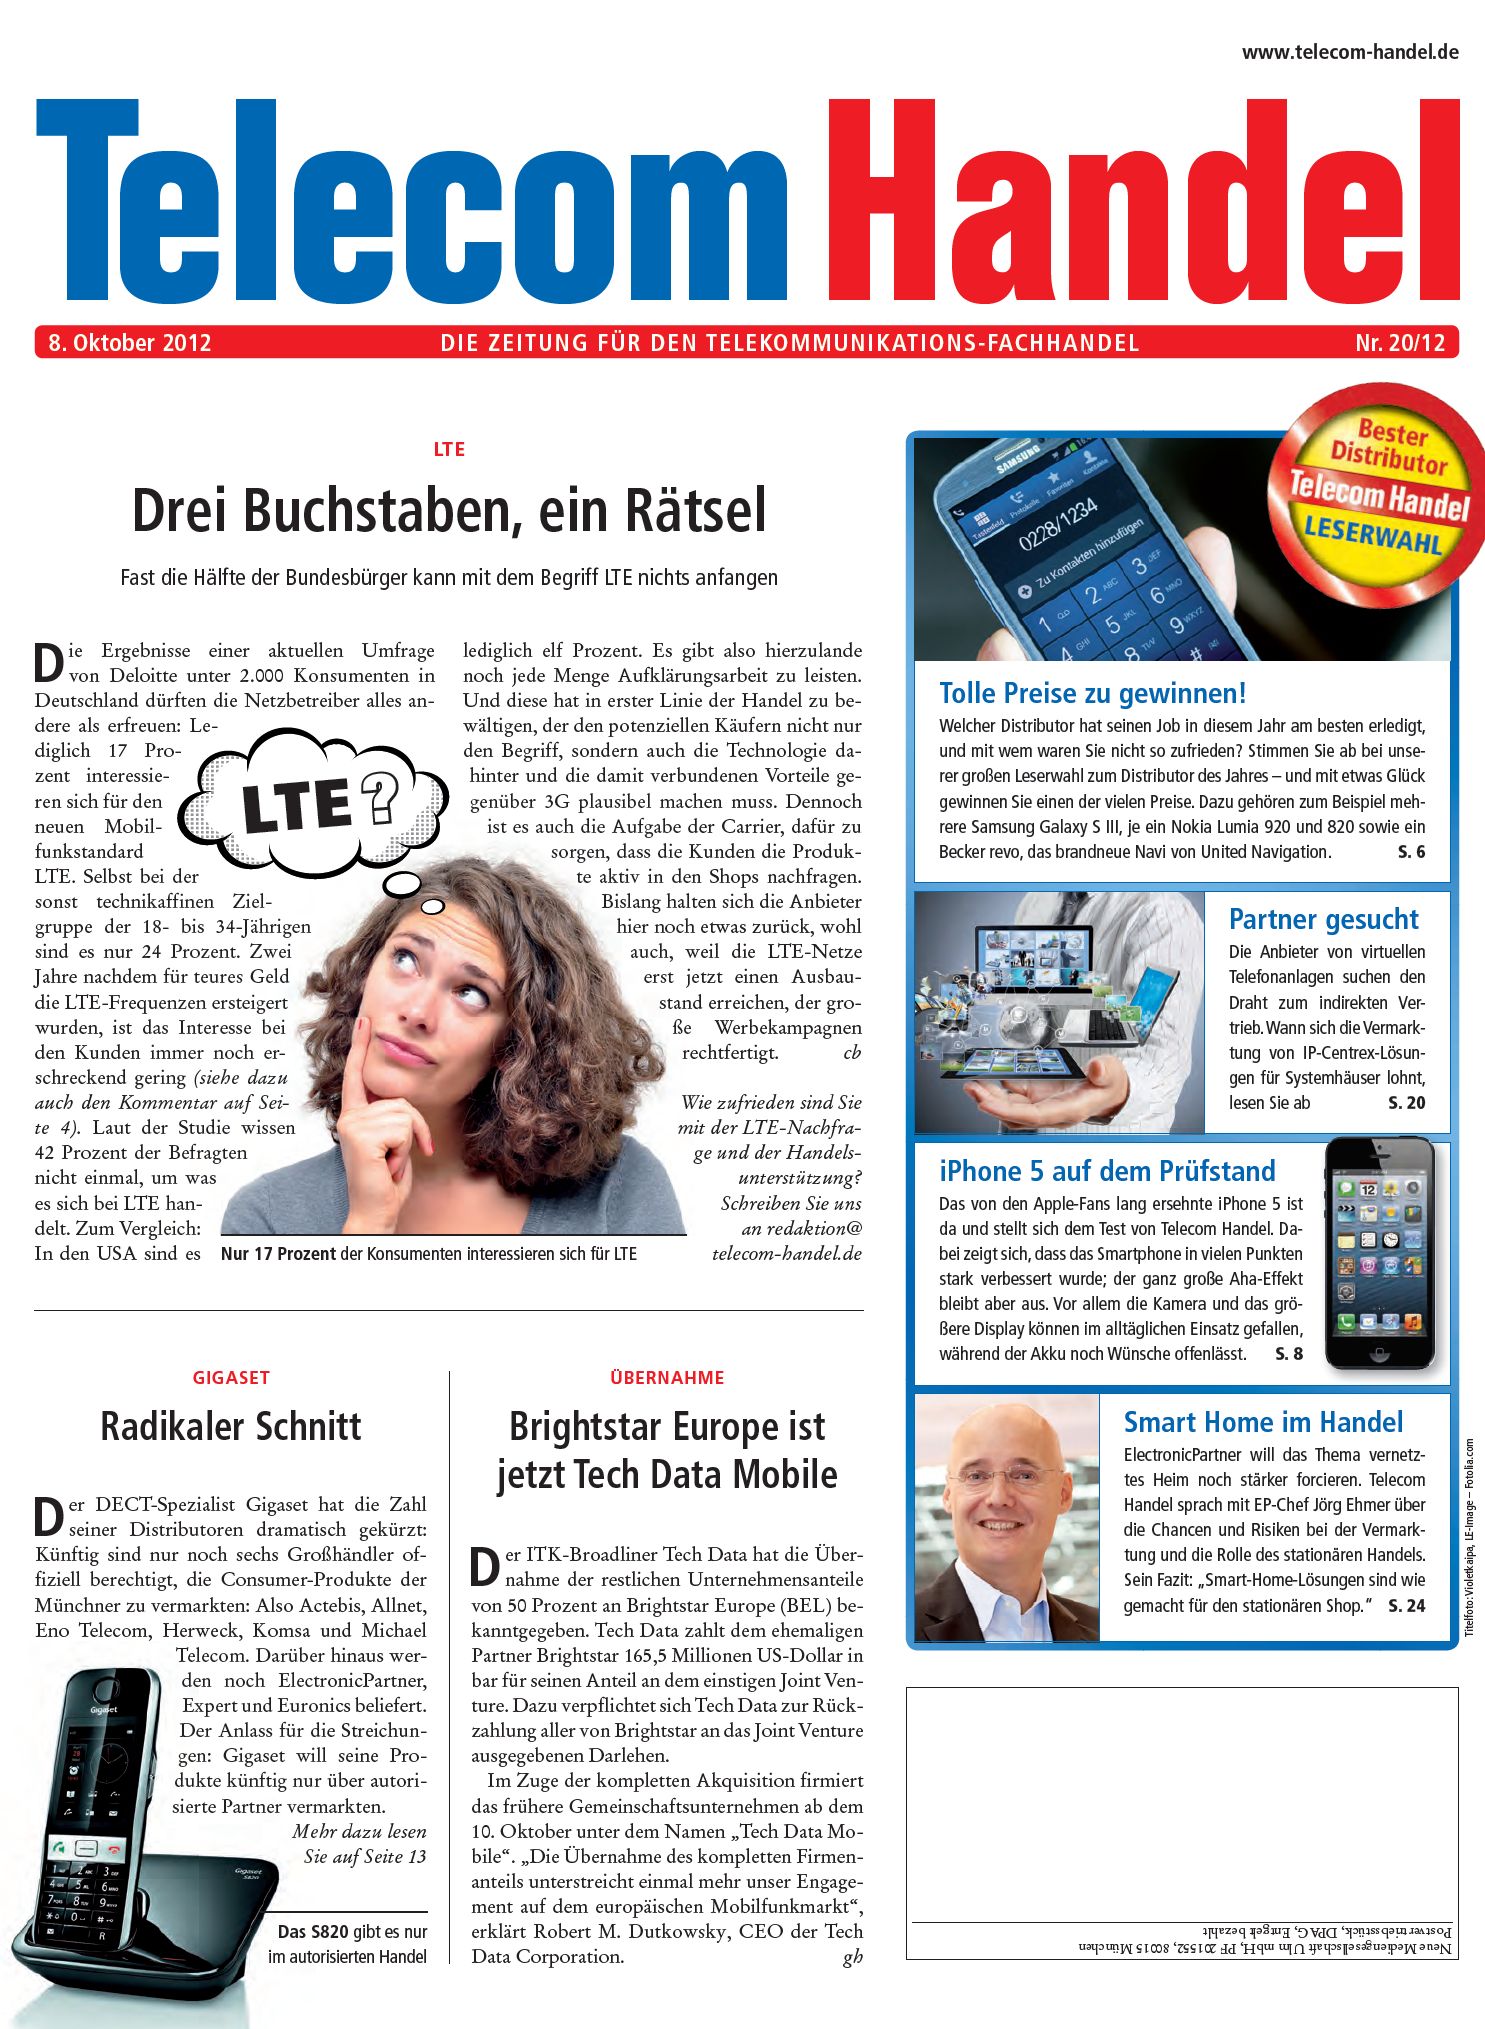 Telekom Handel Ausgabe 20/2012